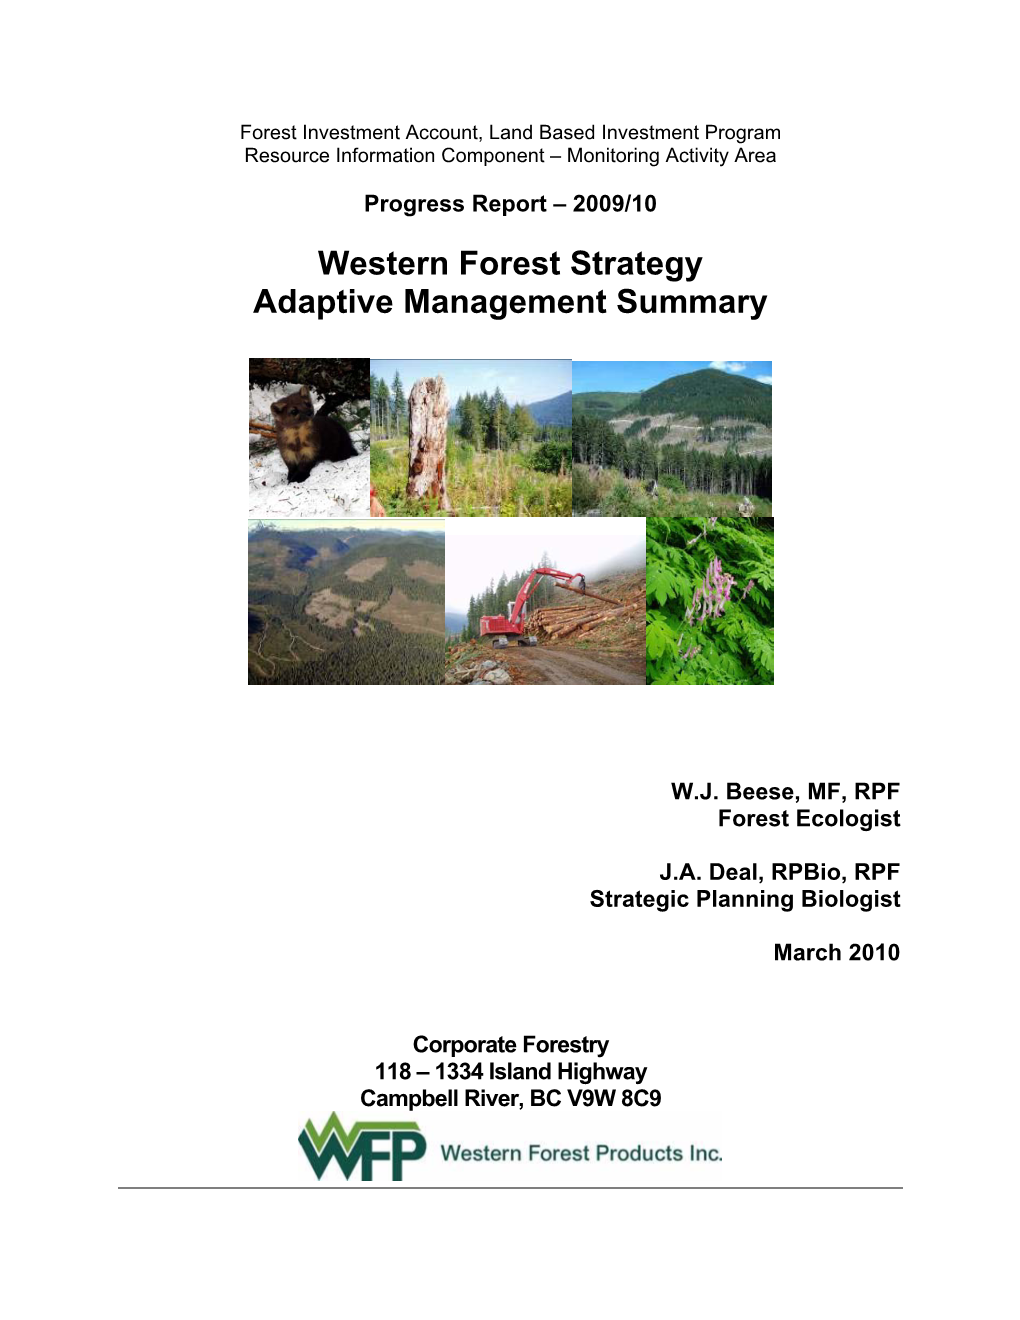 Western Forest Strategy Adaptive Management Summary